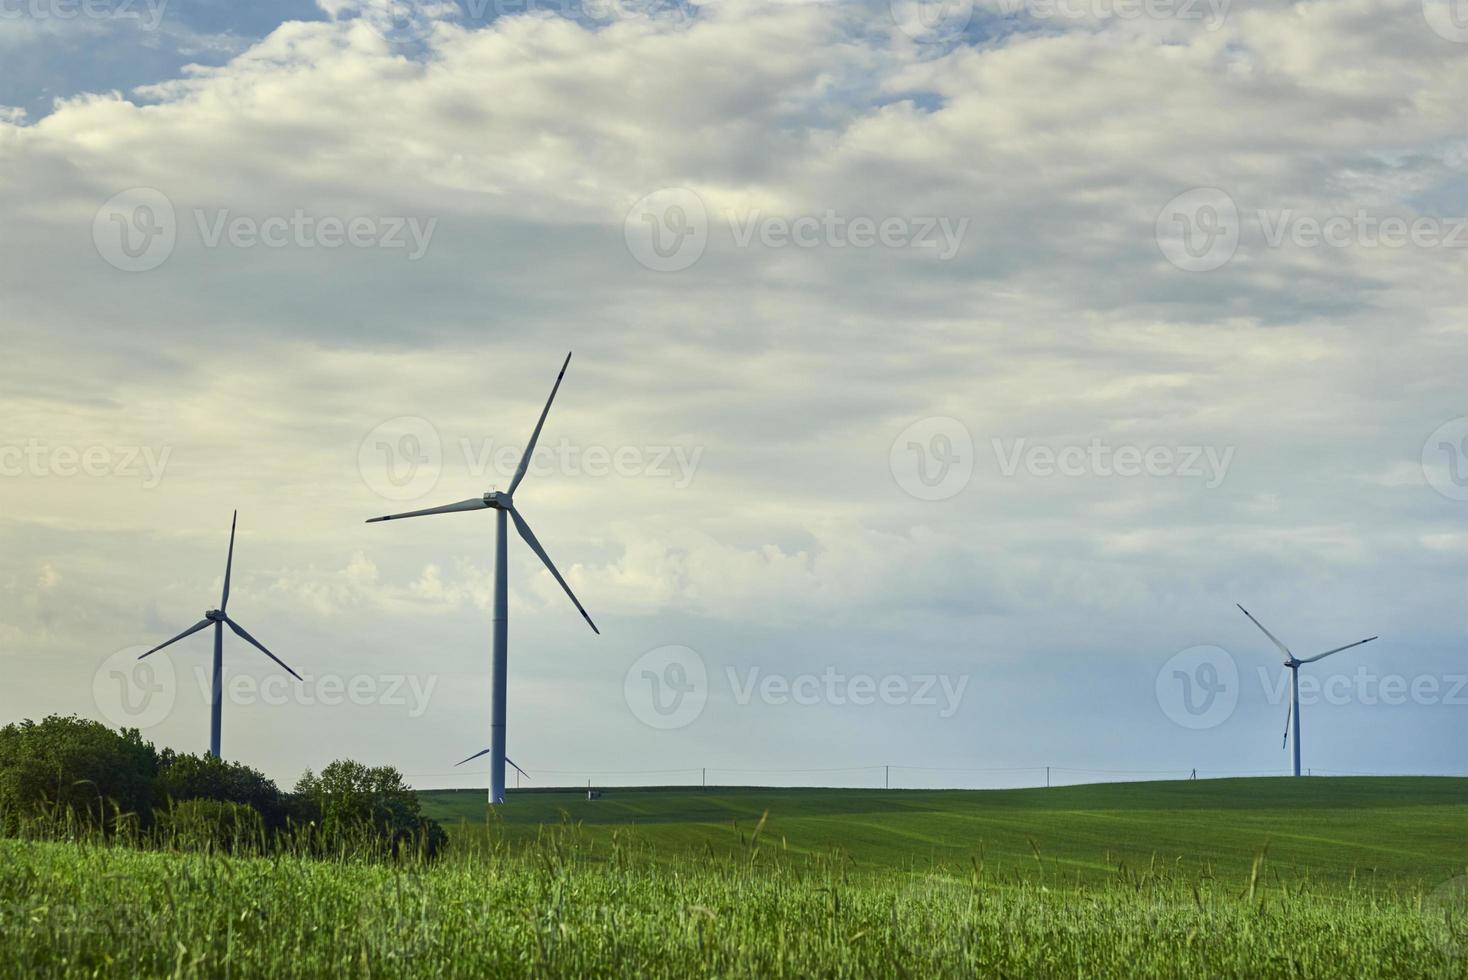 turbina eólica no campo. conceito de energia eólica foto